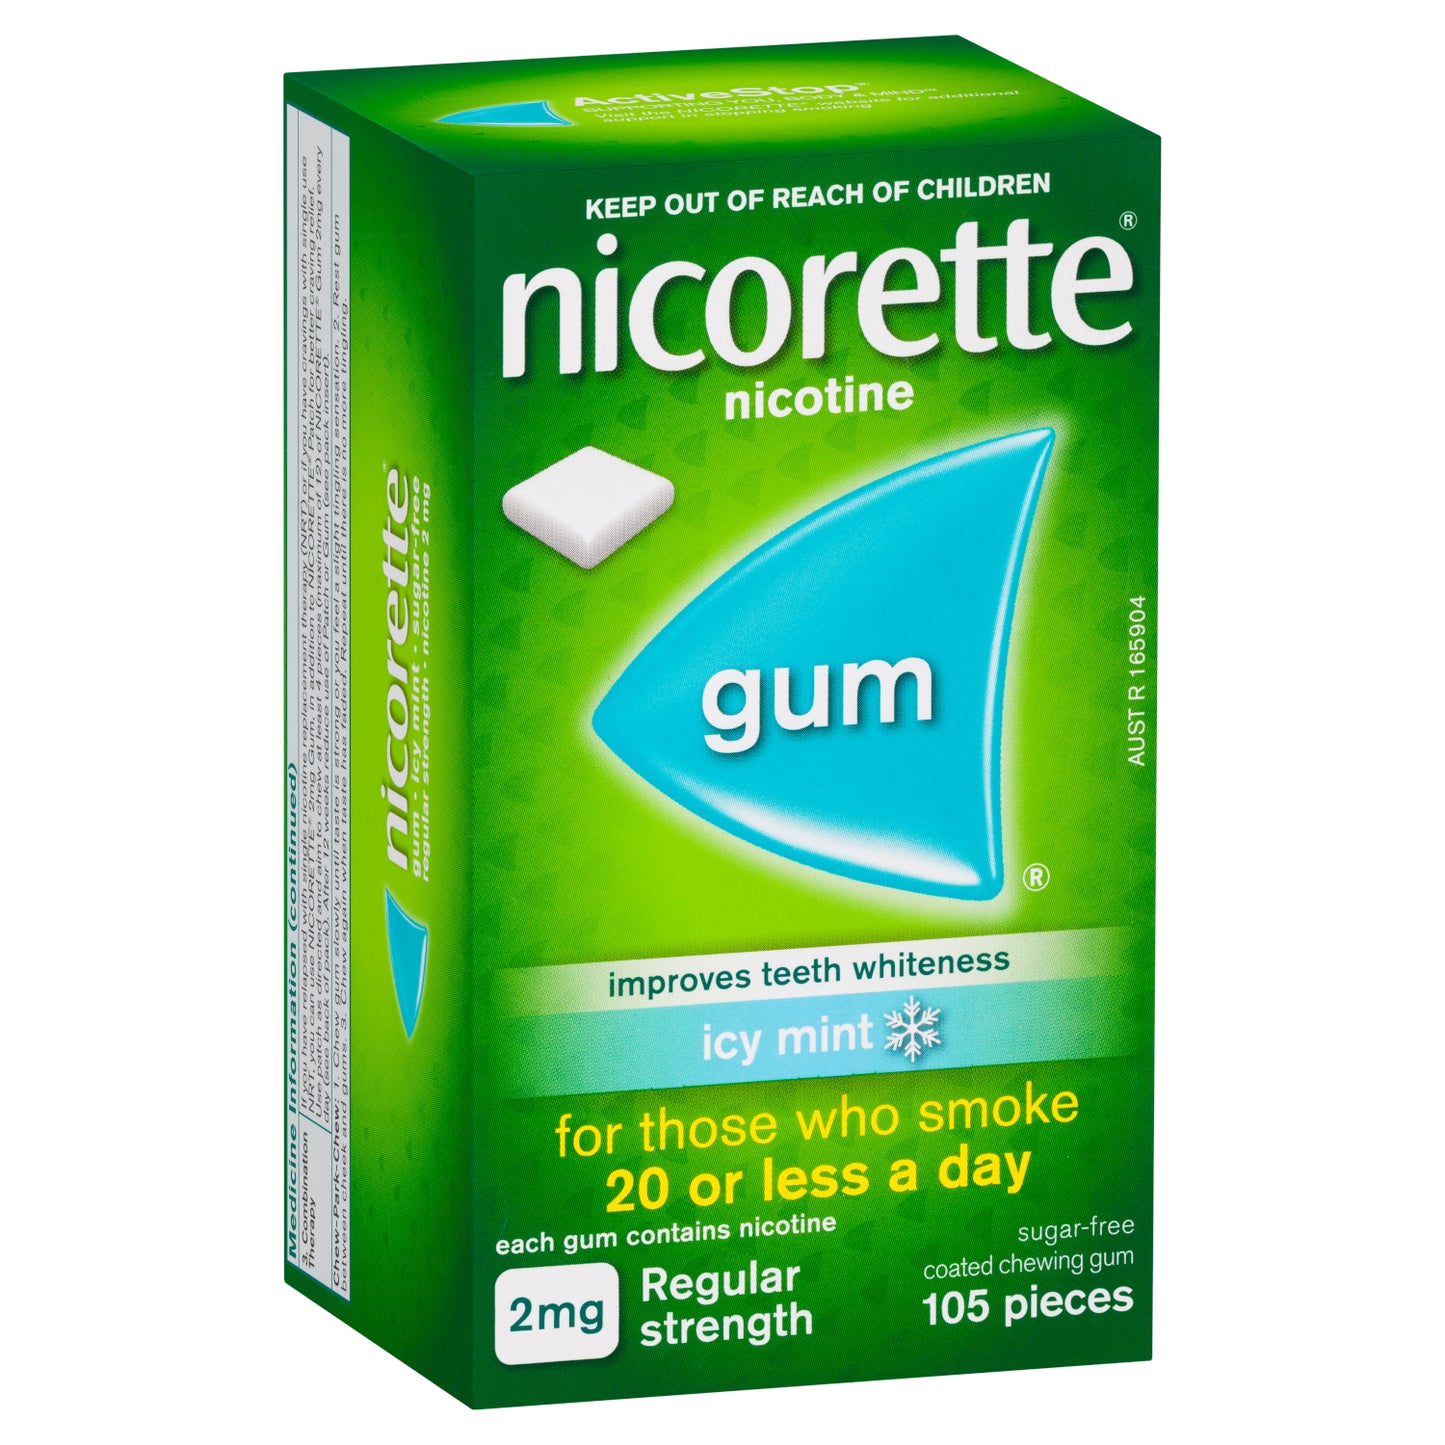 Nicorette Regular Strength Chewing Gum 2mg - Icy Mint